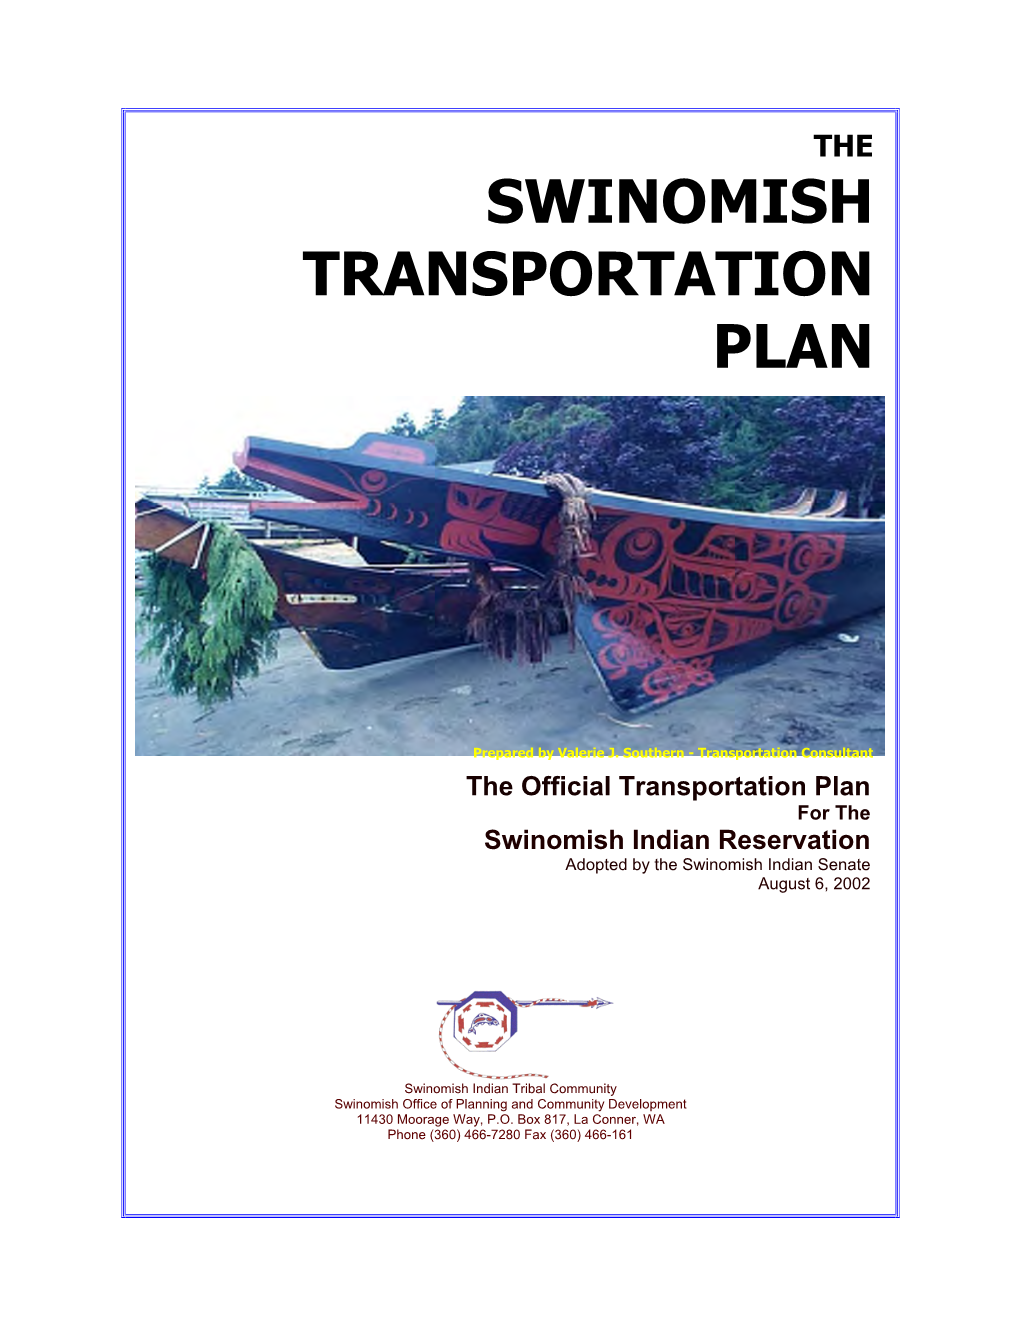 Swinomish Transportation Plan